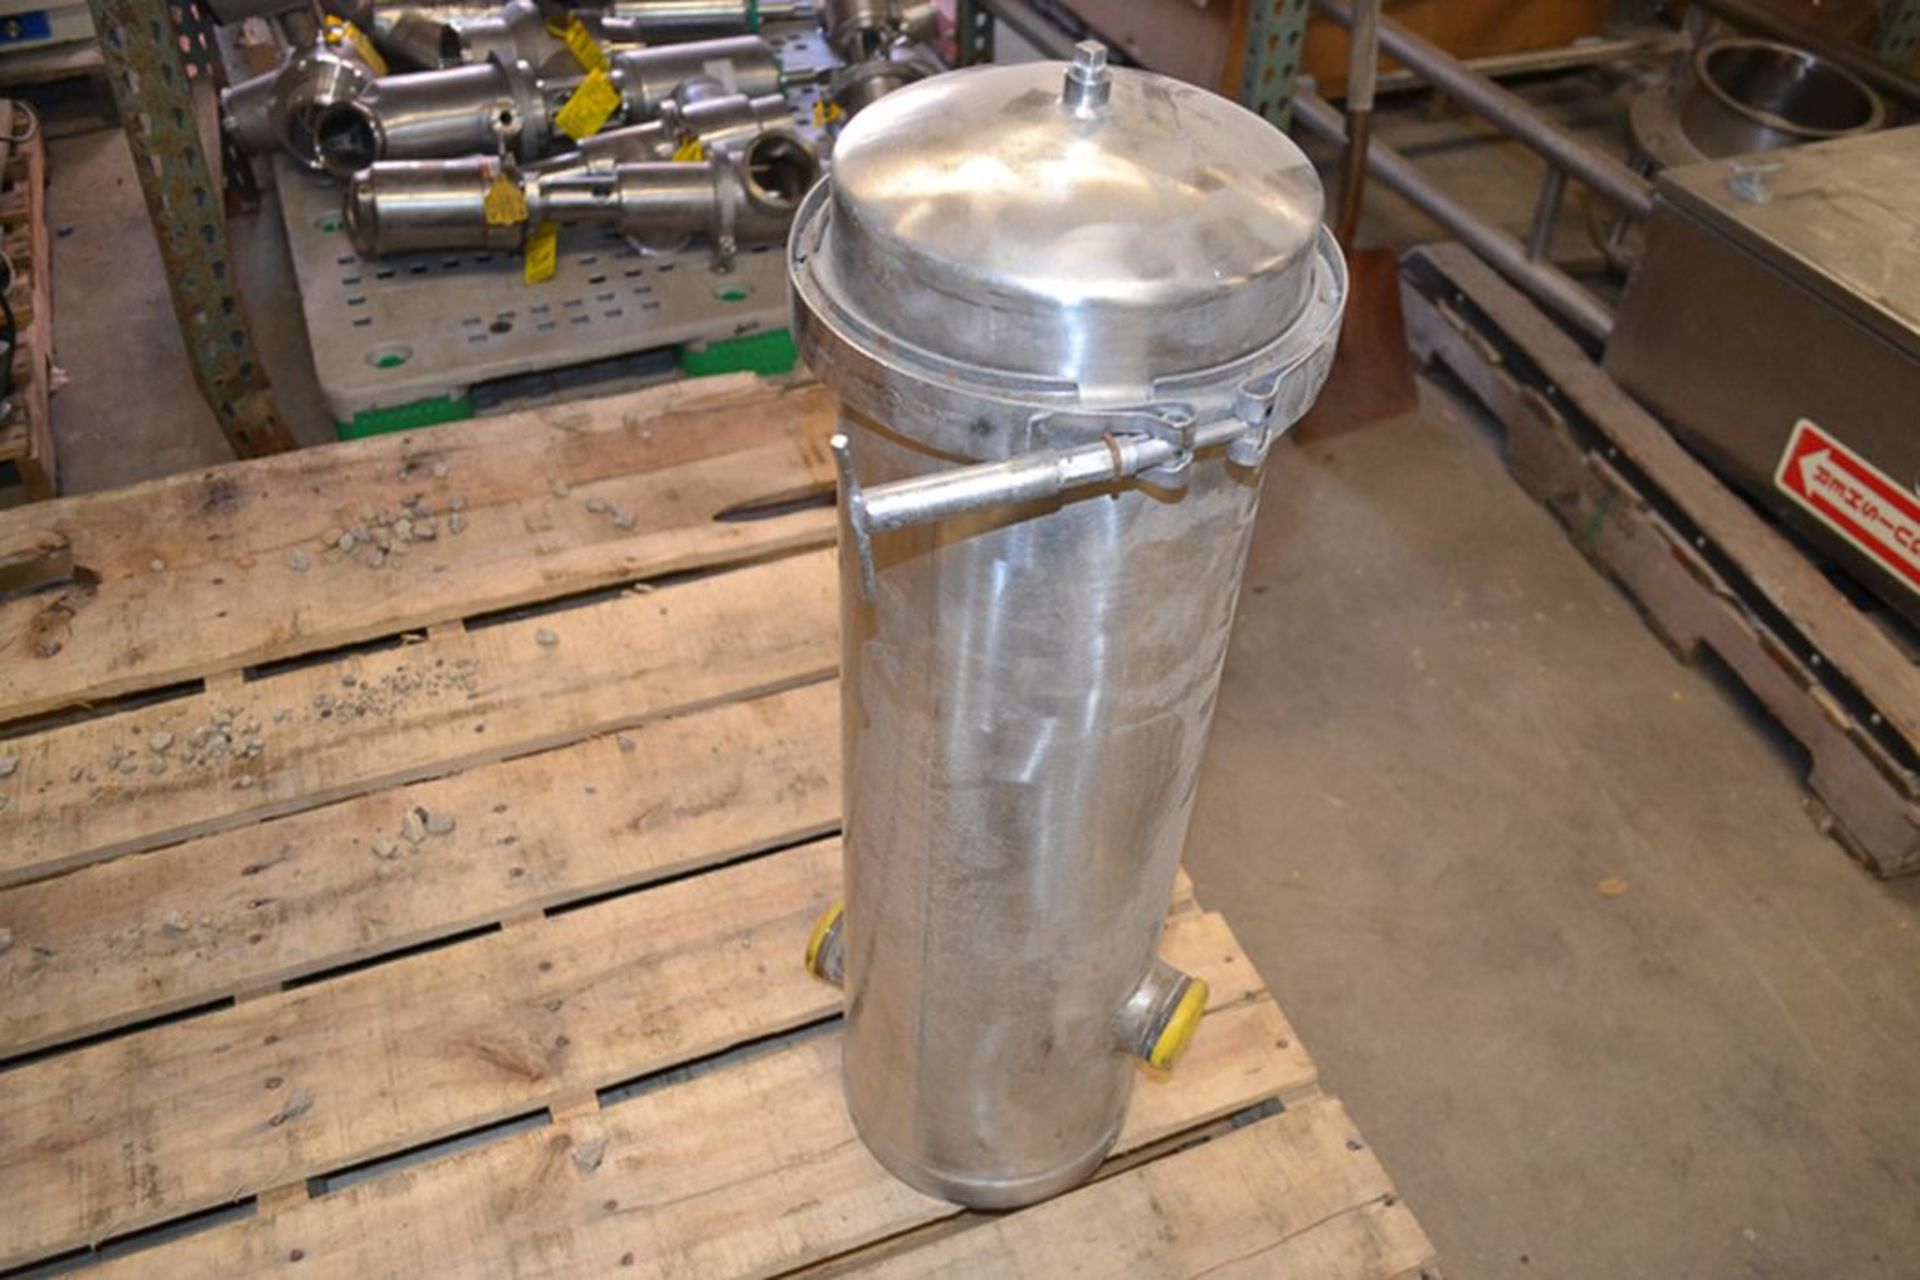 S/S Vertical Water Filter Tanks with Internal S/S Filter Rack, 8" Diameter x 20" Deep, 2" NPT - Image 2 of 2